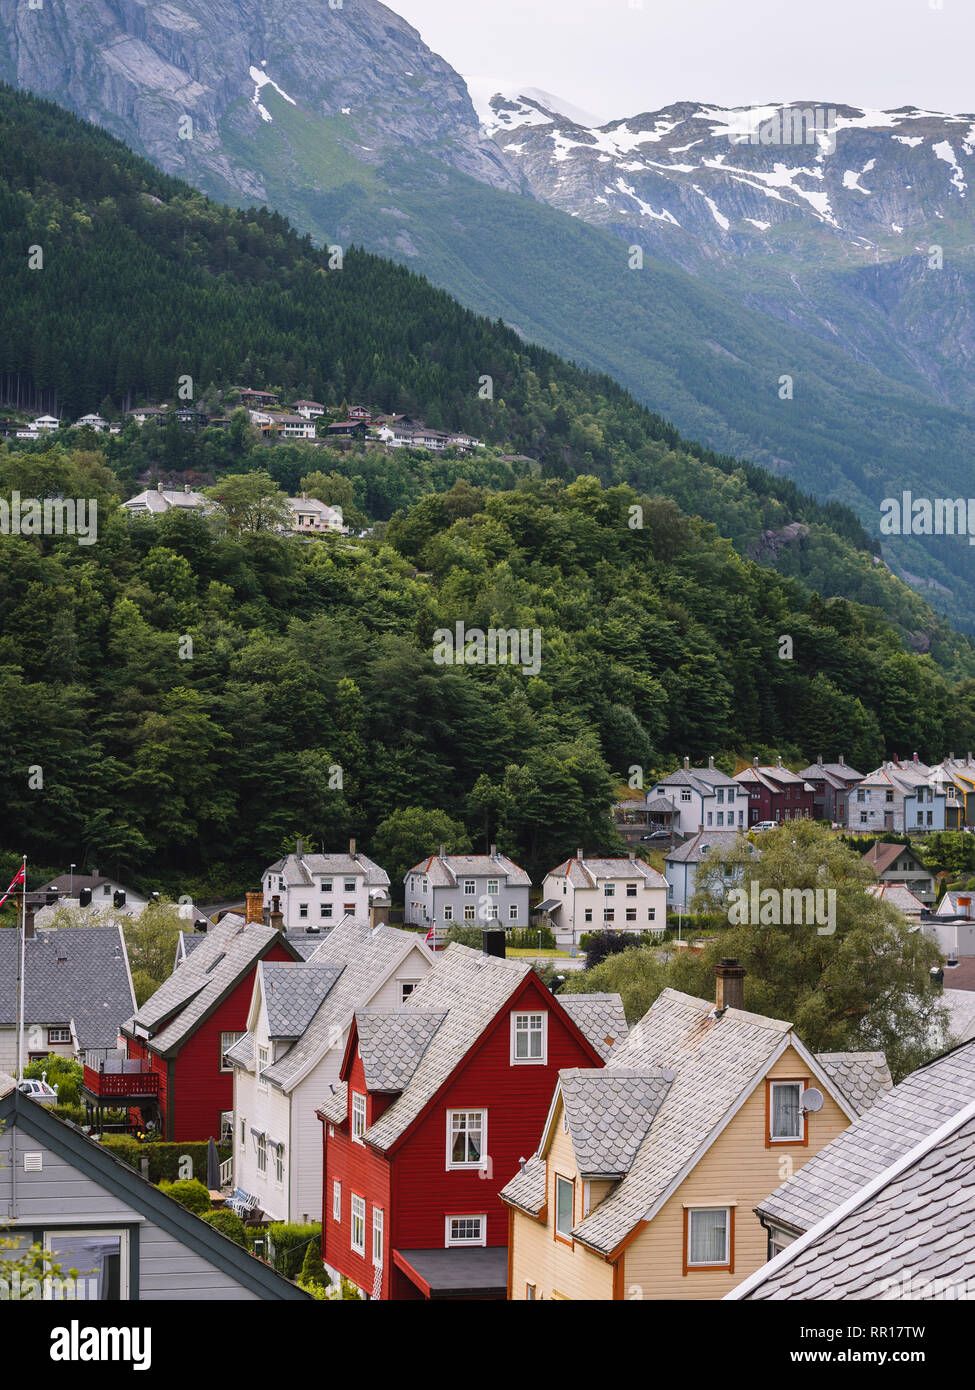 Típico de la arquitectura tradicional escandinava. Norwegian Mountain Village en verano. Odda, Noruega Foto de stock